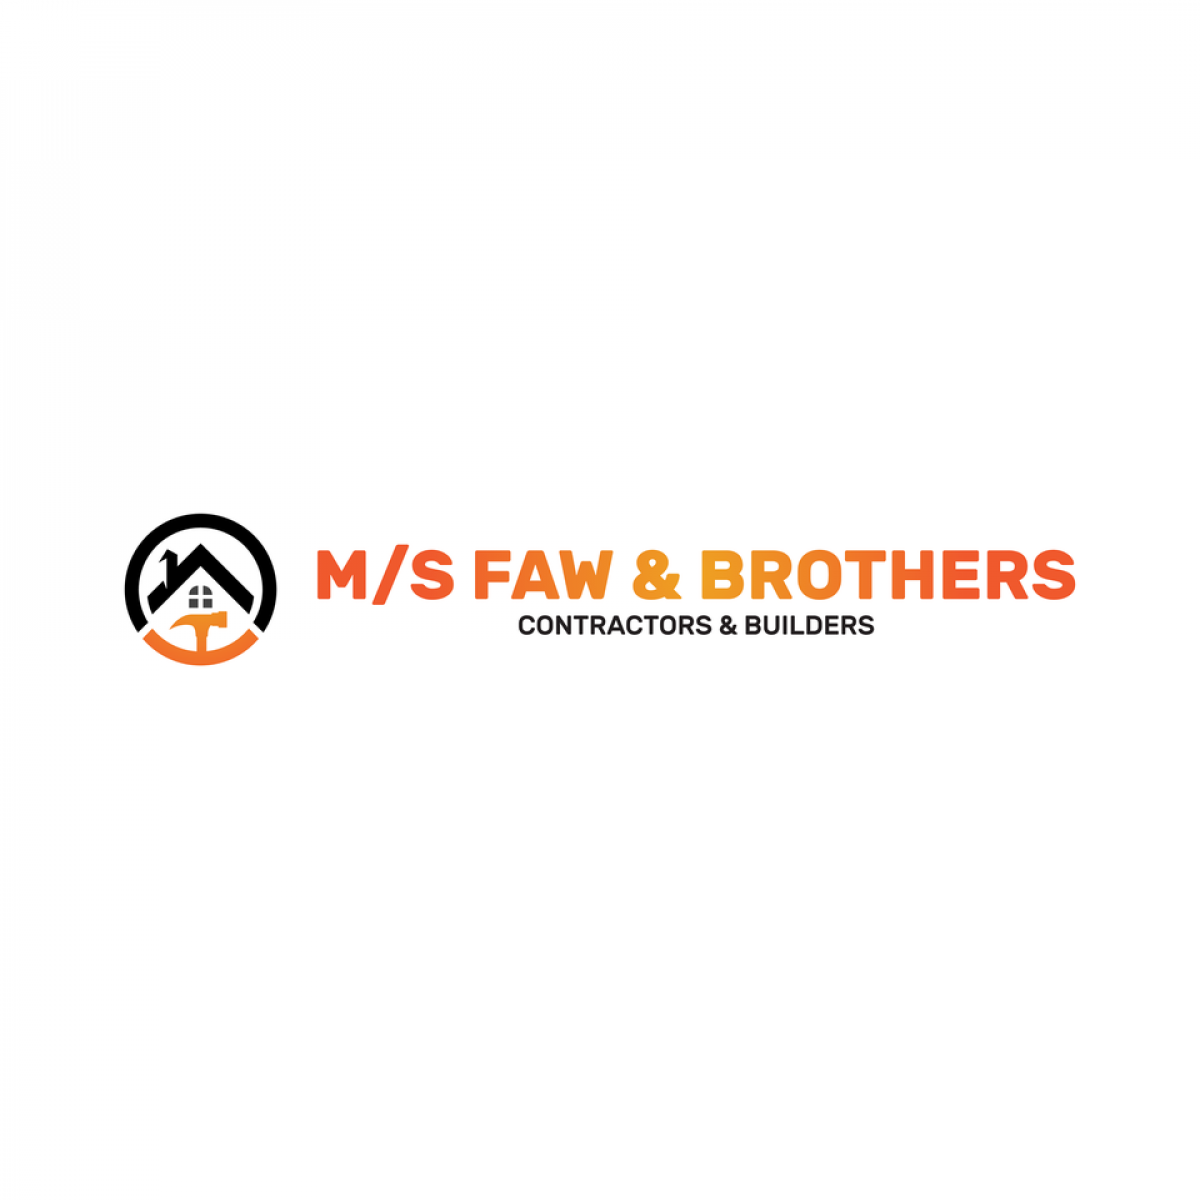 FAW & BROTHERS CONTRACTORS & BUILDERS